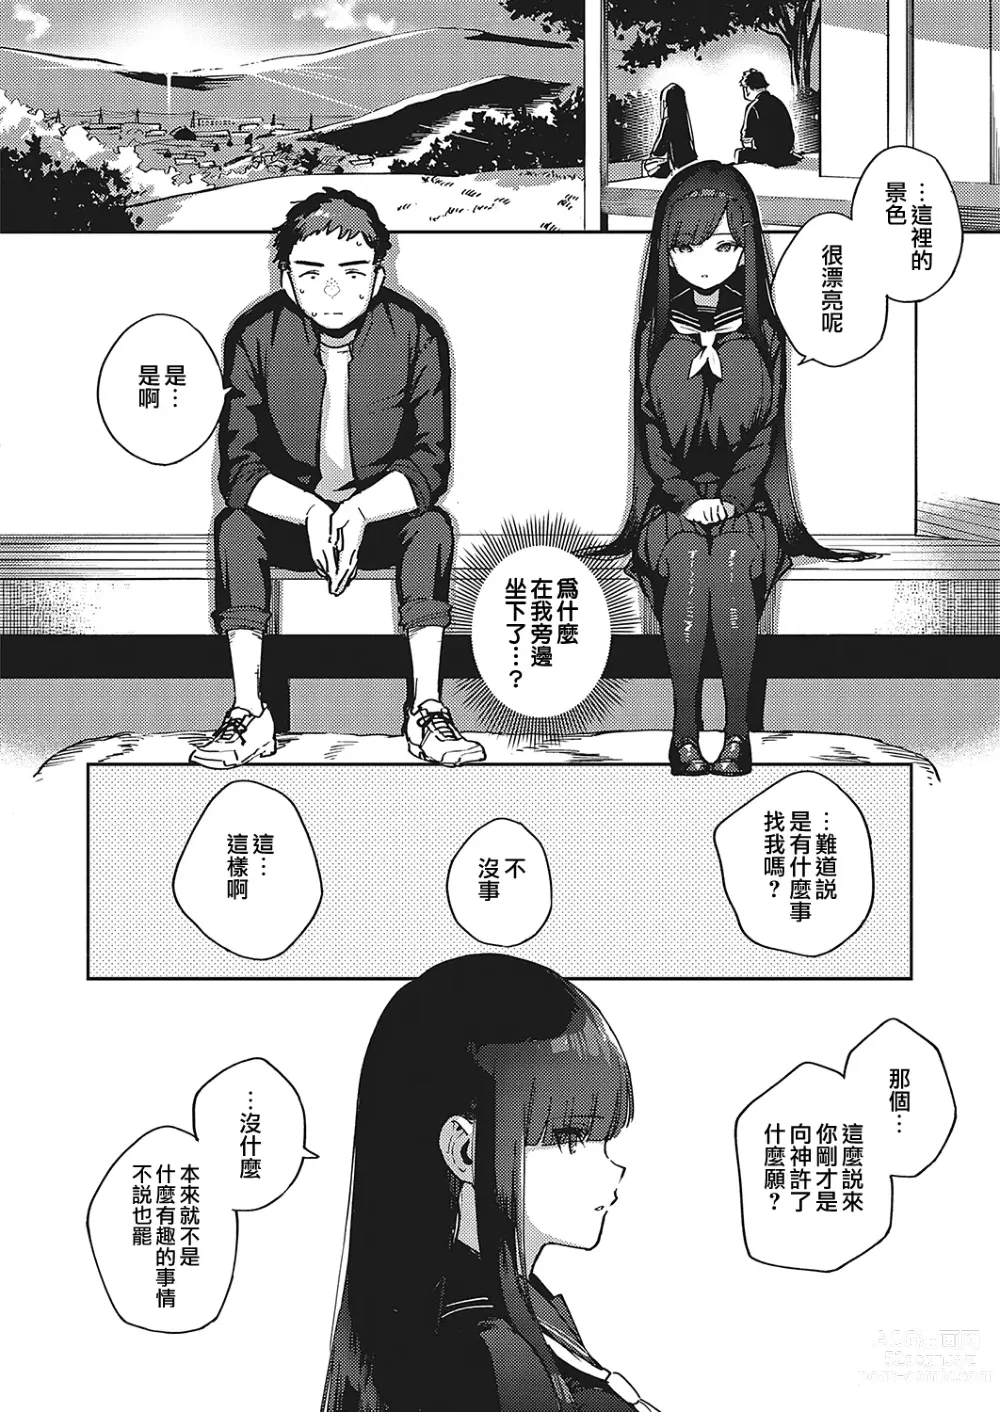 Page 6 of manga 再見了 轉校生